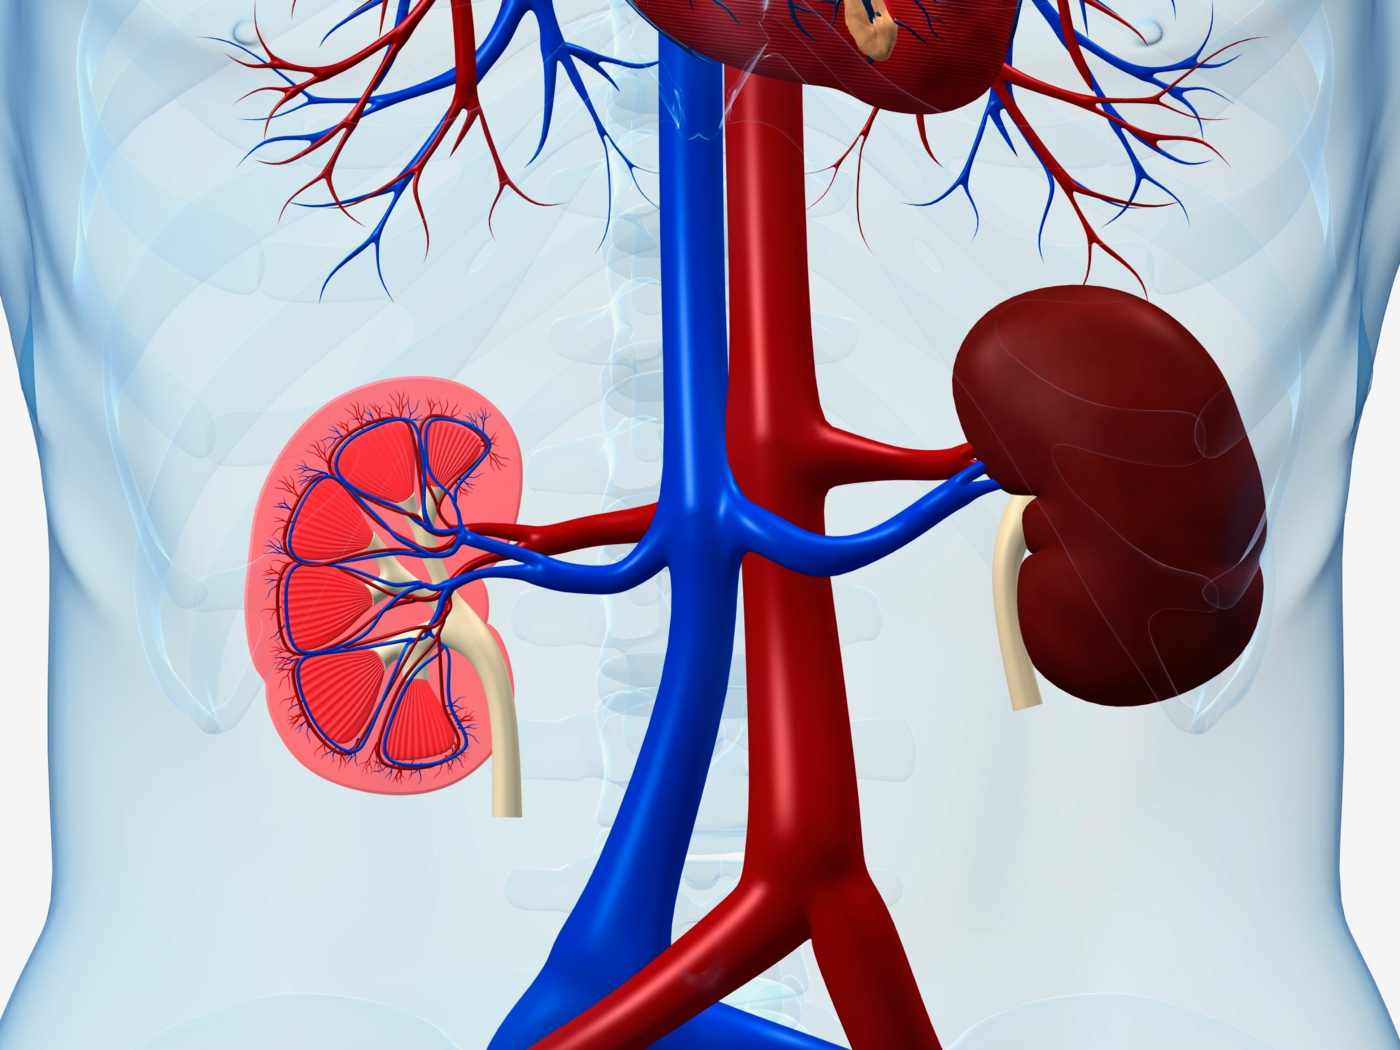 Kidney urea values ​​rise in kidney failure